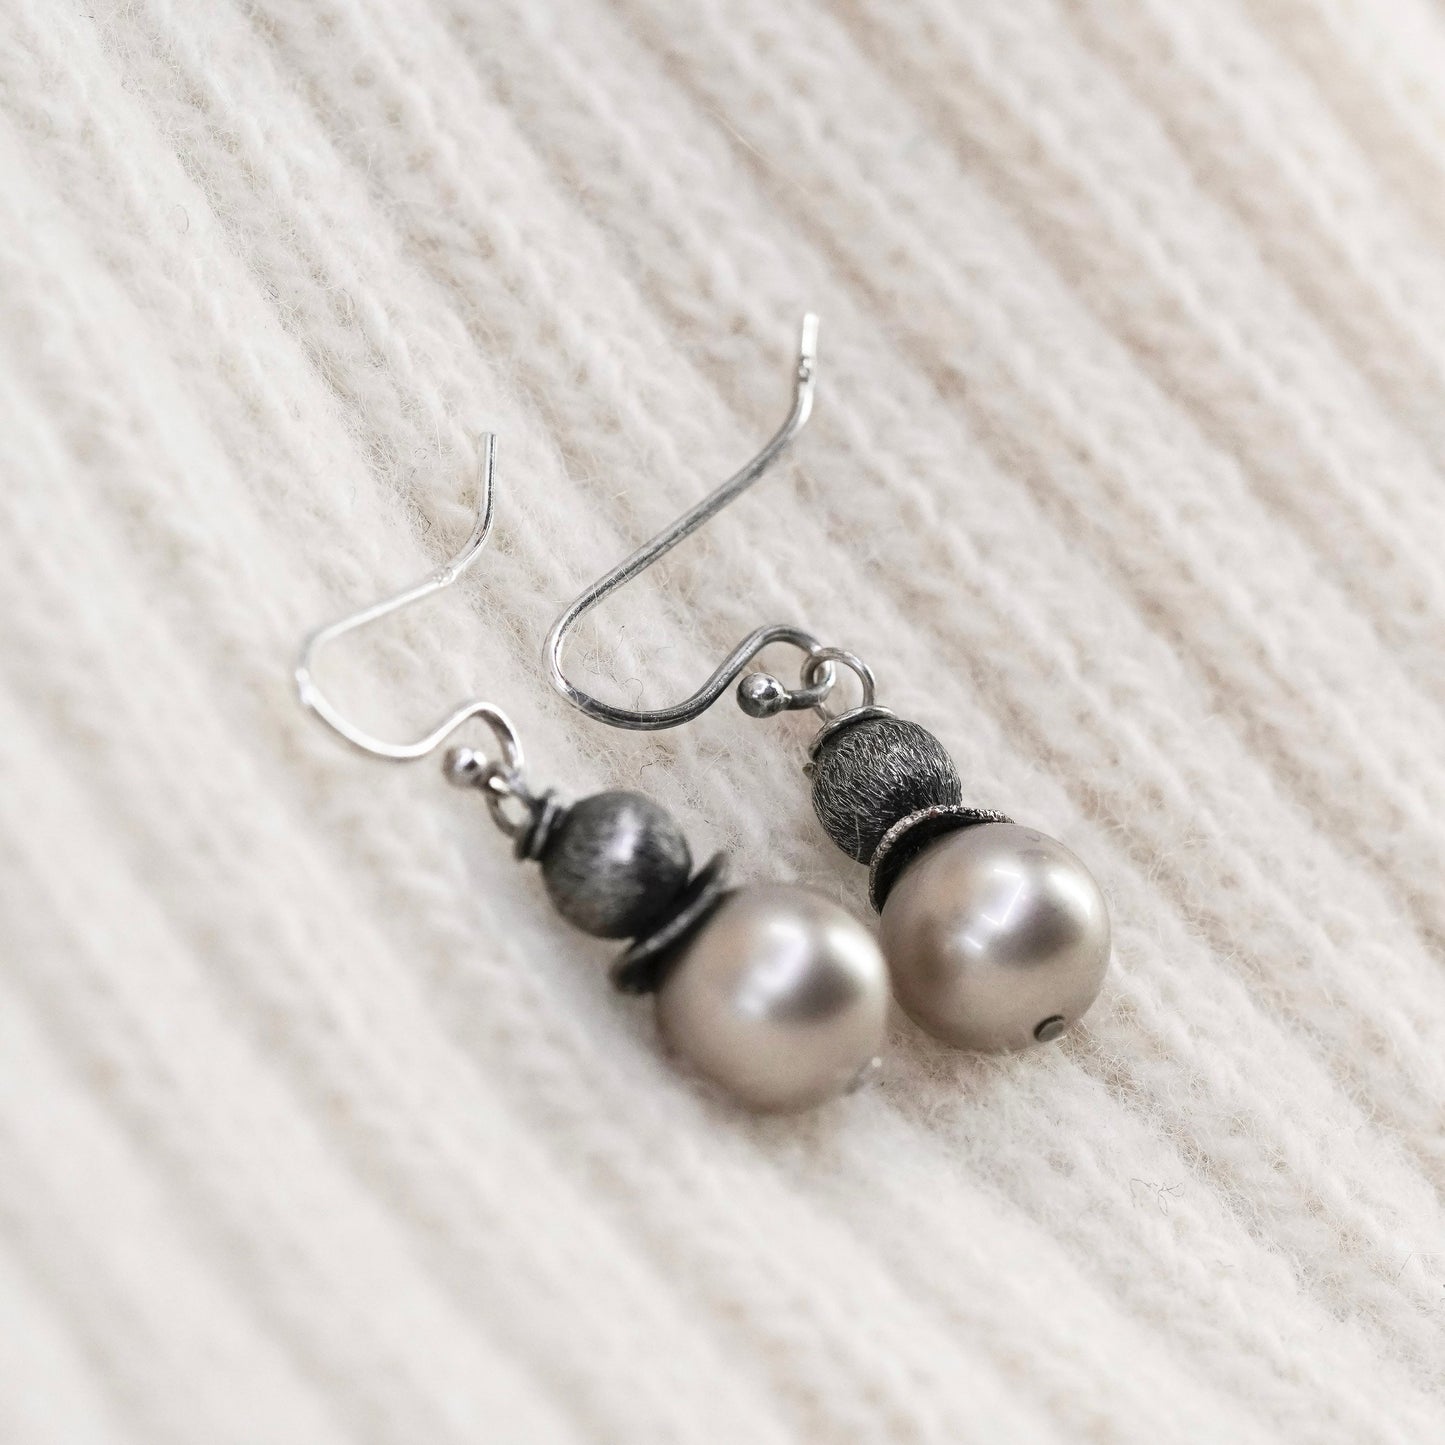 Vintage Sterling silver handmade earrings, 925 hooks with pearl drops